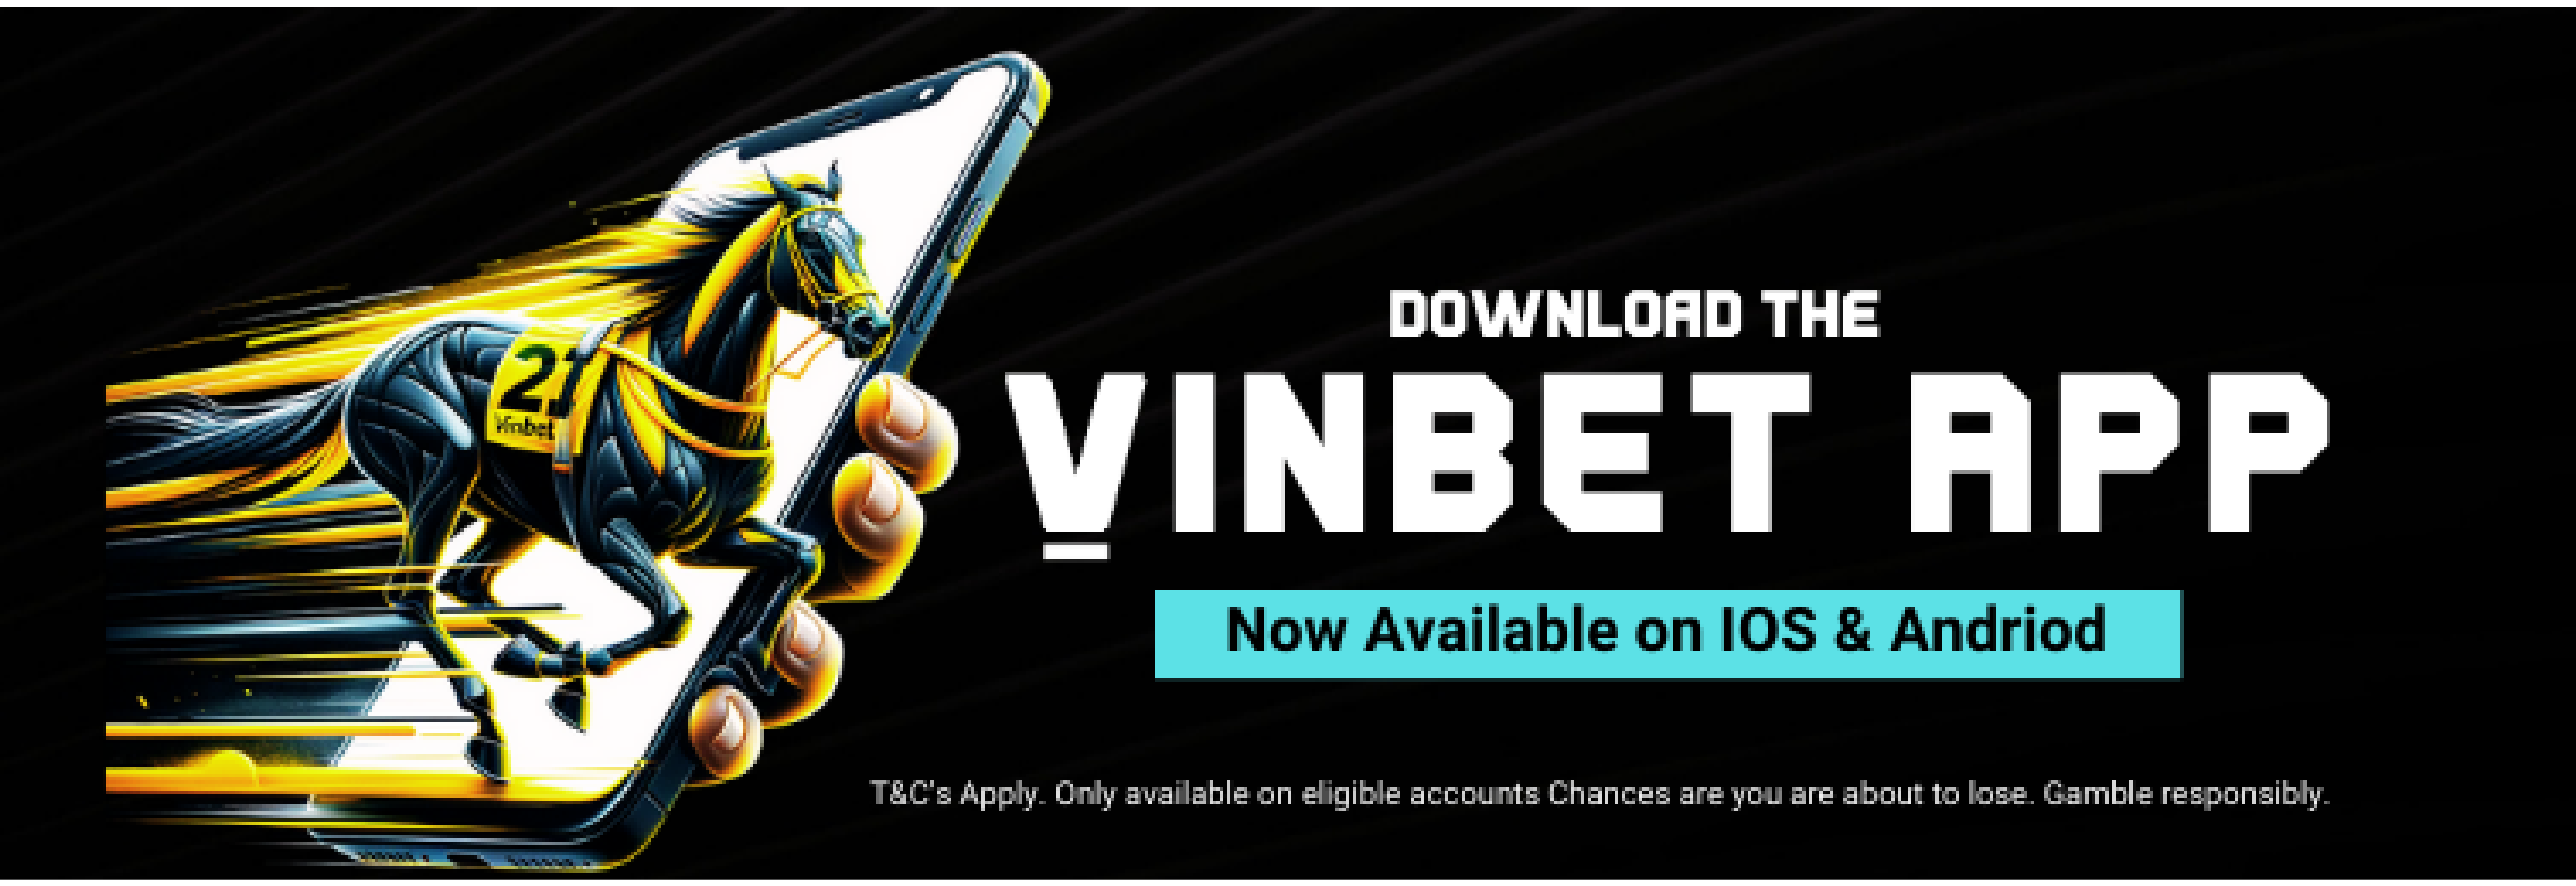 vinbet-app